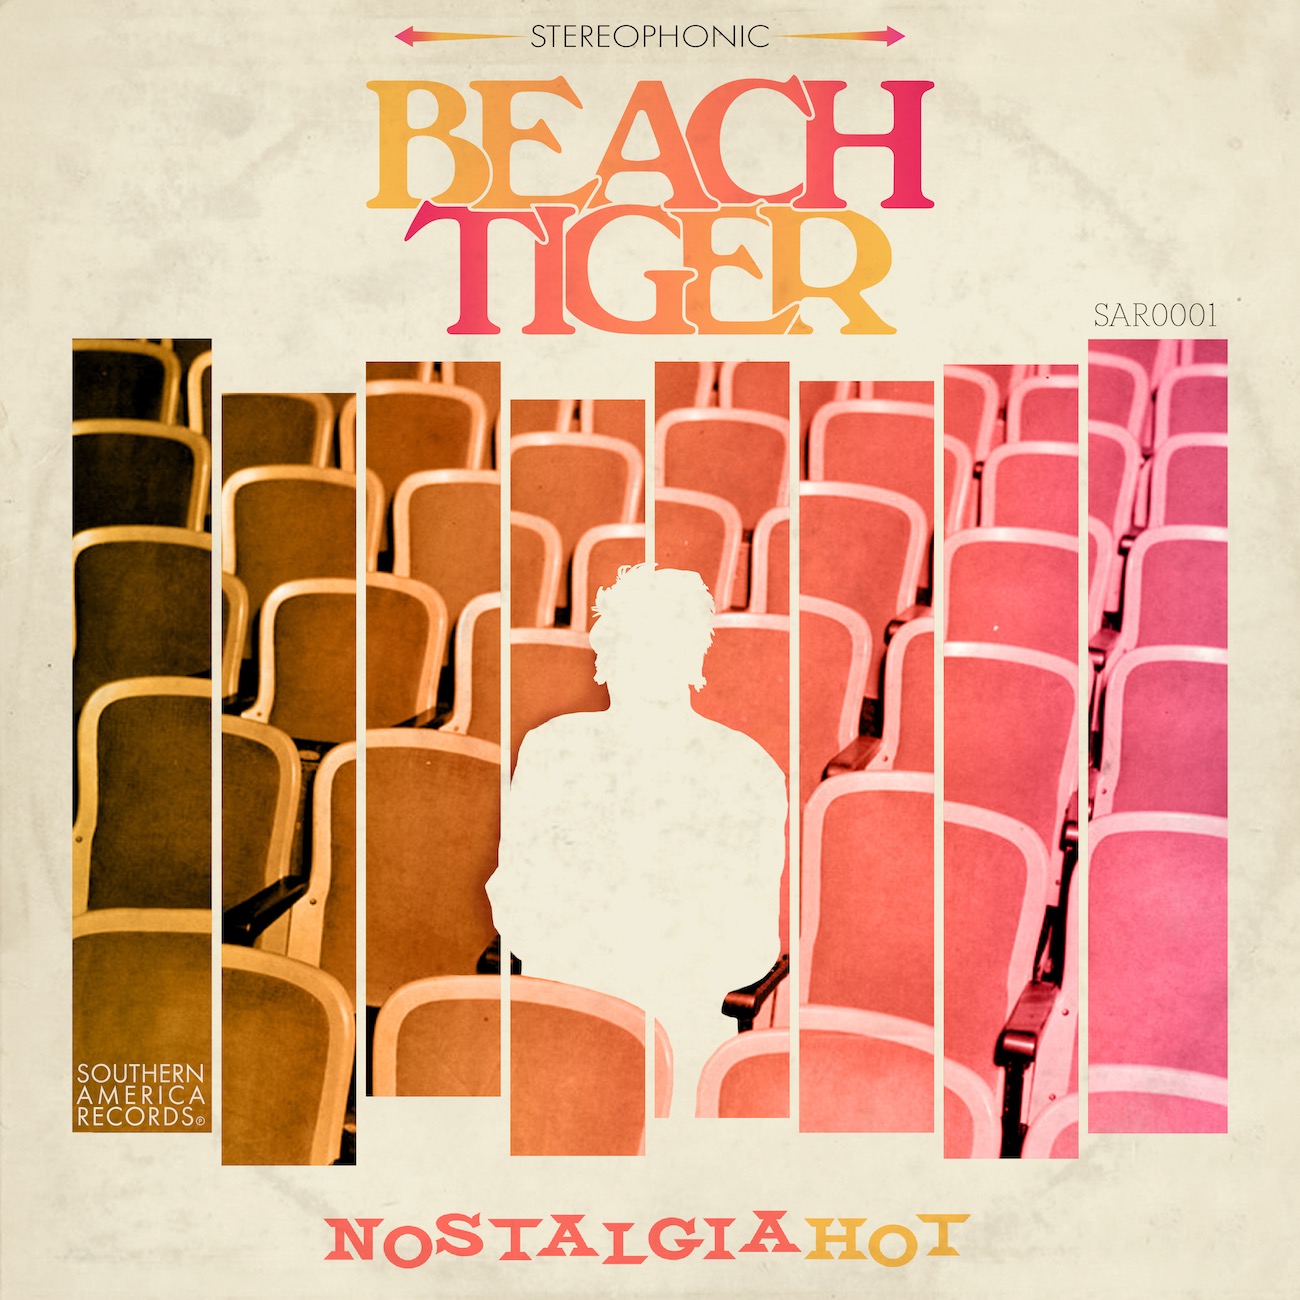 Nostalgia Hot - Beach Tiger